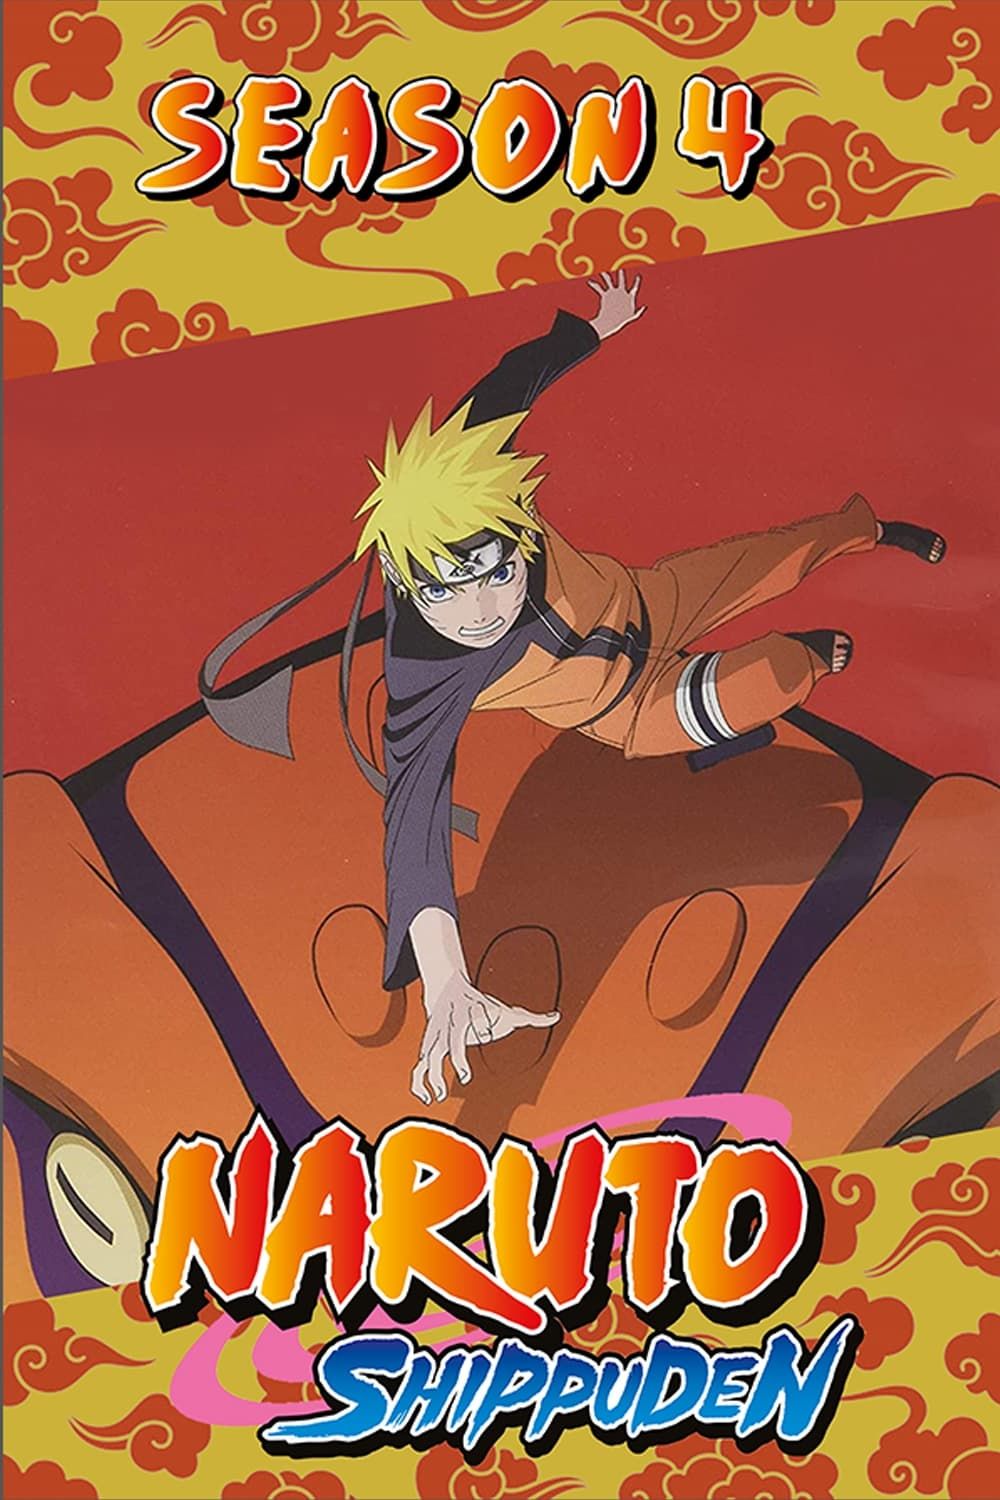 Watch Naruto Shippuden season 4 episode 12 streaming online